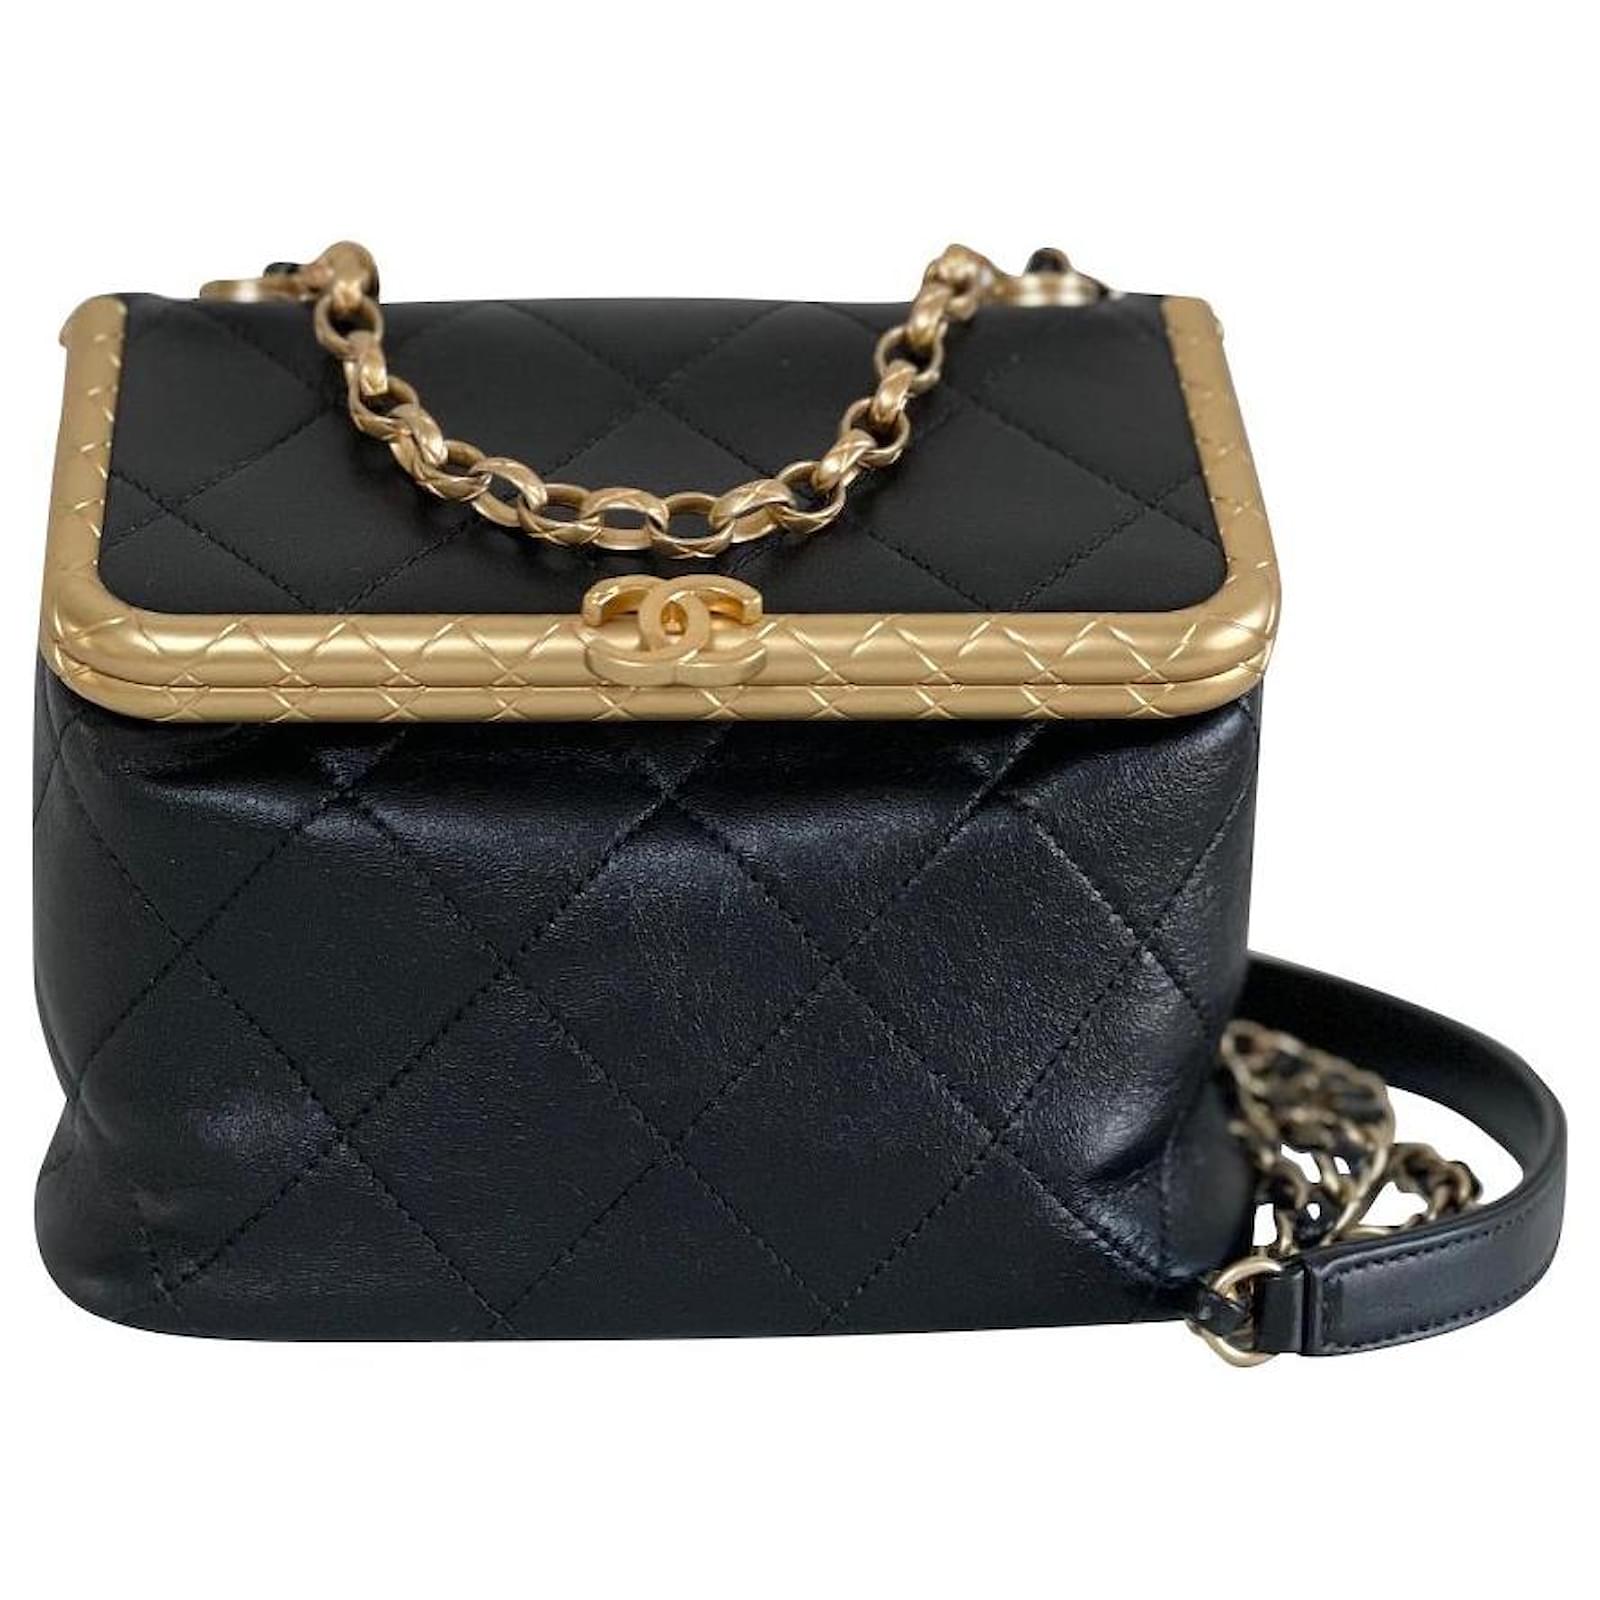 Chanel Kiss Lock “My Crush” bag